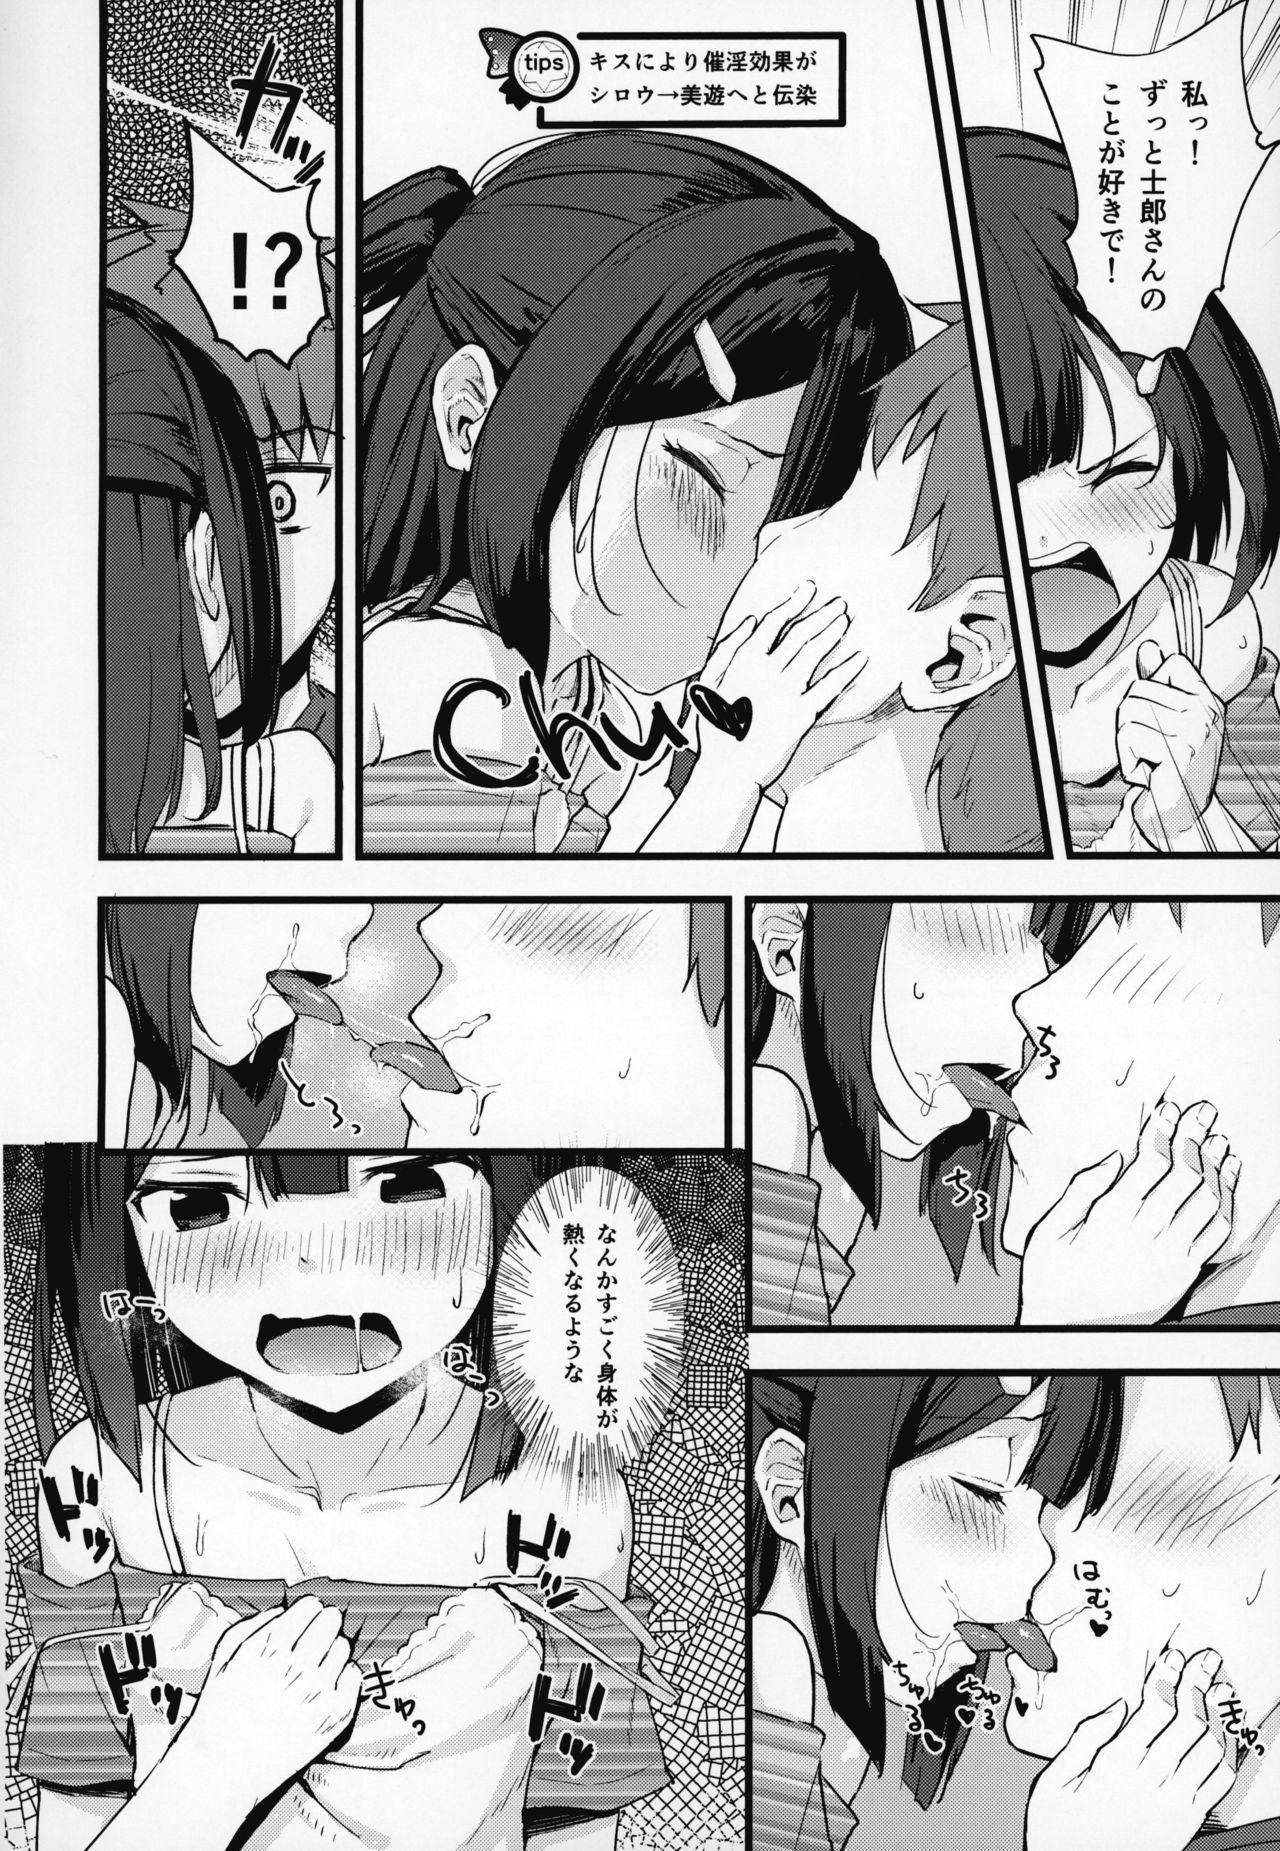 Best Blowjob Ever Miyu-chan no Install! Sweet Sister! - Fate kaleid liner prisma illya Vietnam - Page 5